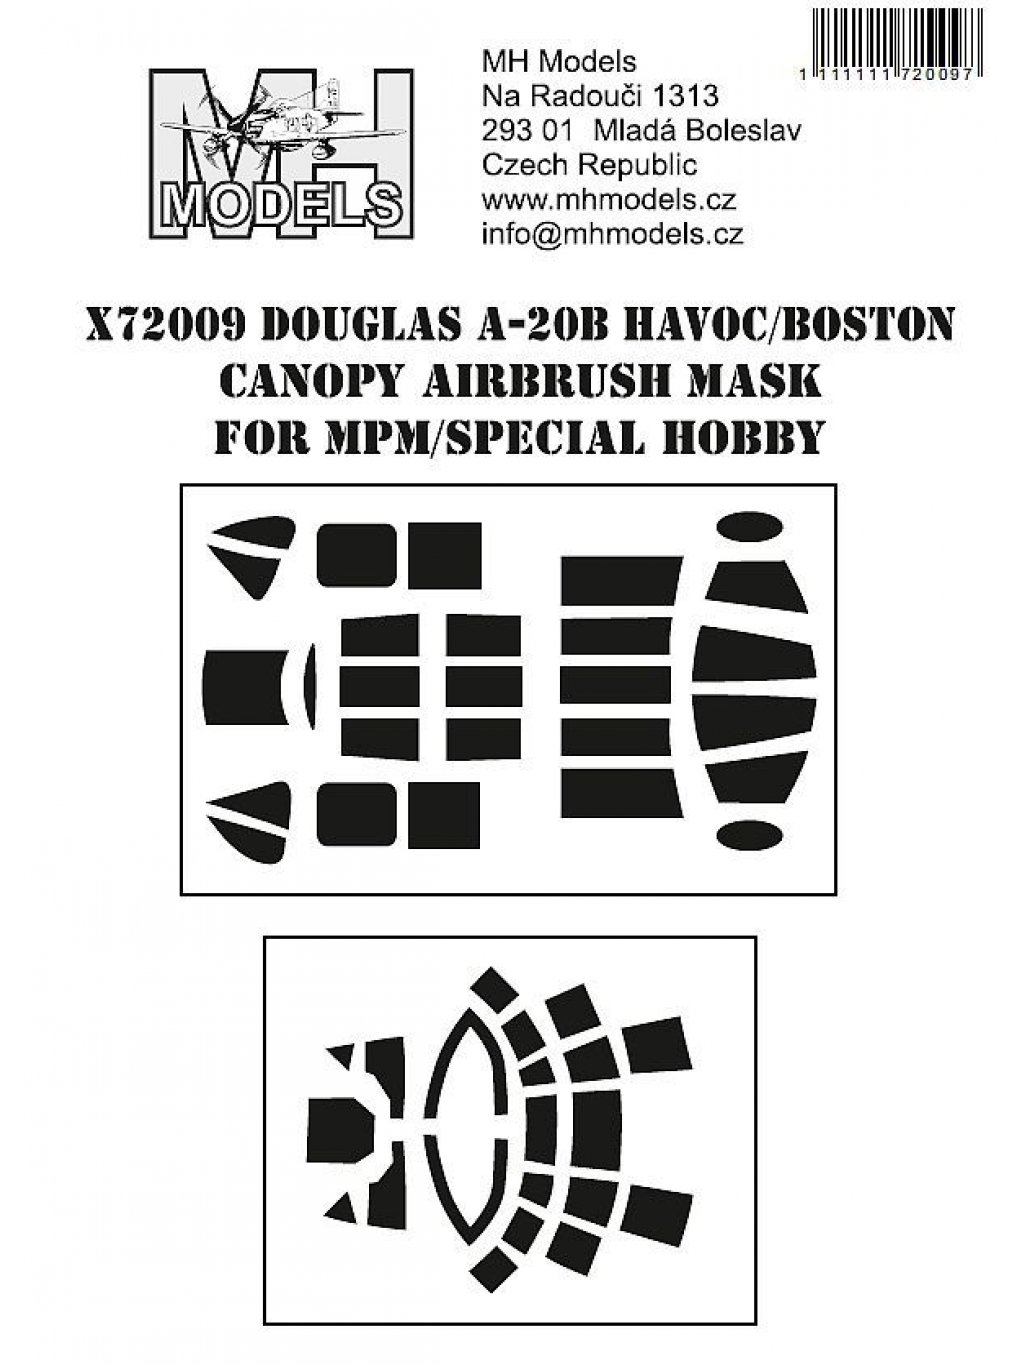 Douglas A-20B Havoc/Boston canopy airbrush mask for MPM/Special Hobby